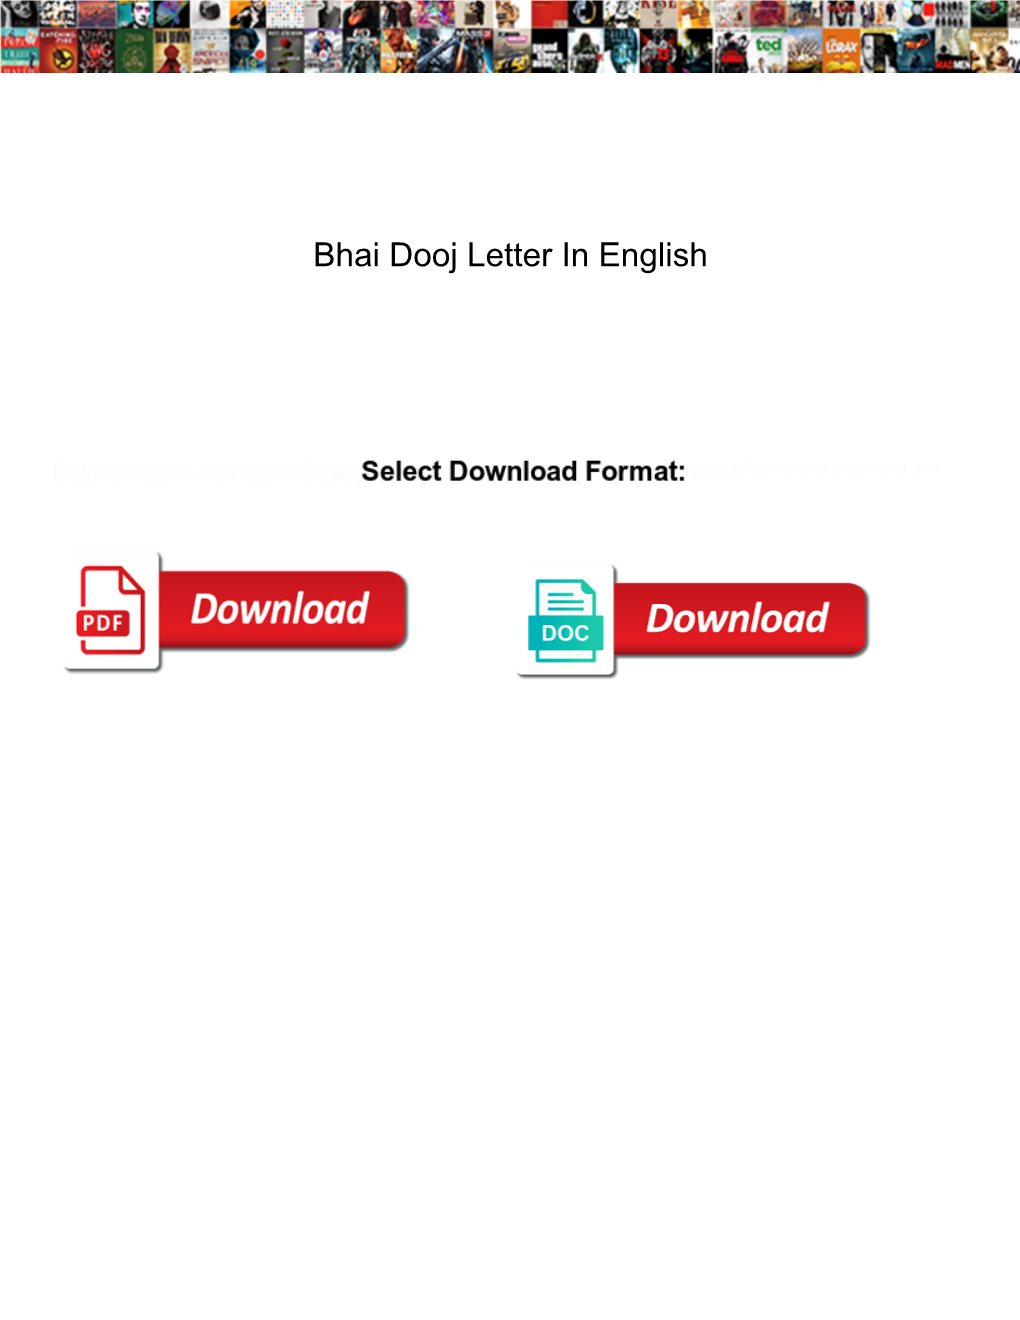 Bhai Dooj Letter in English